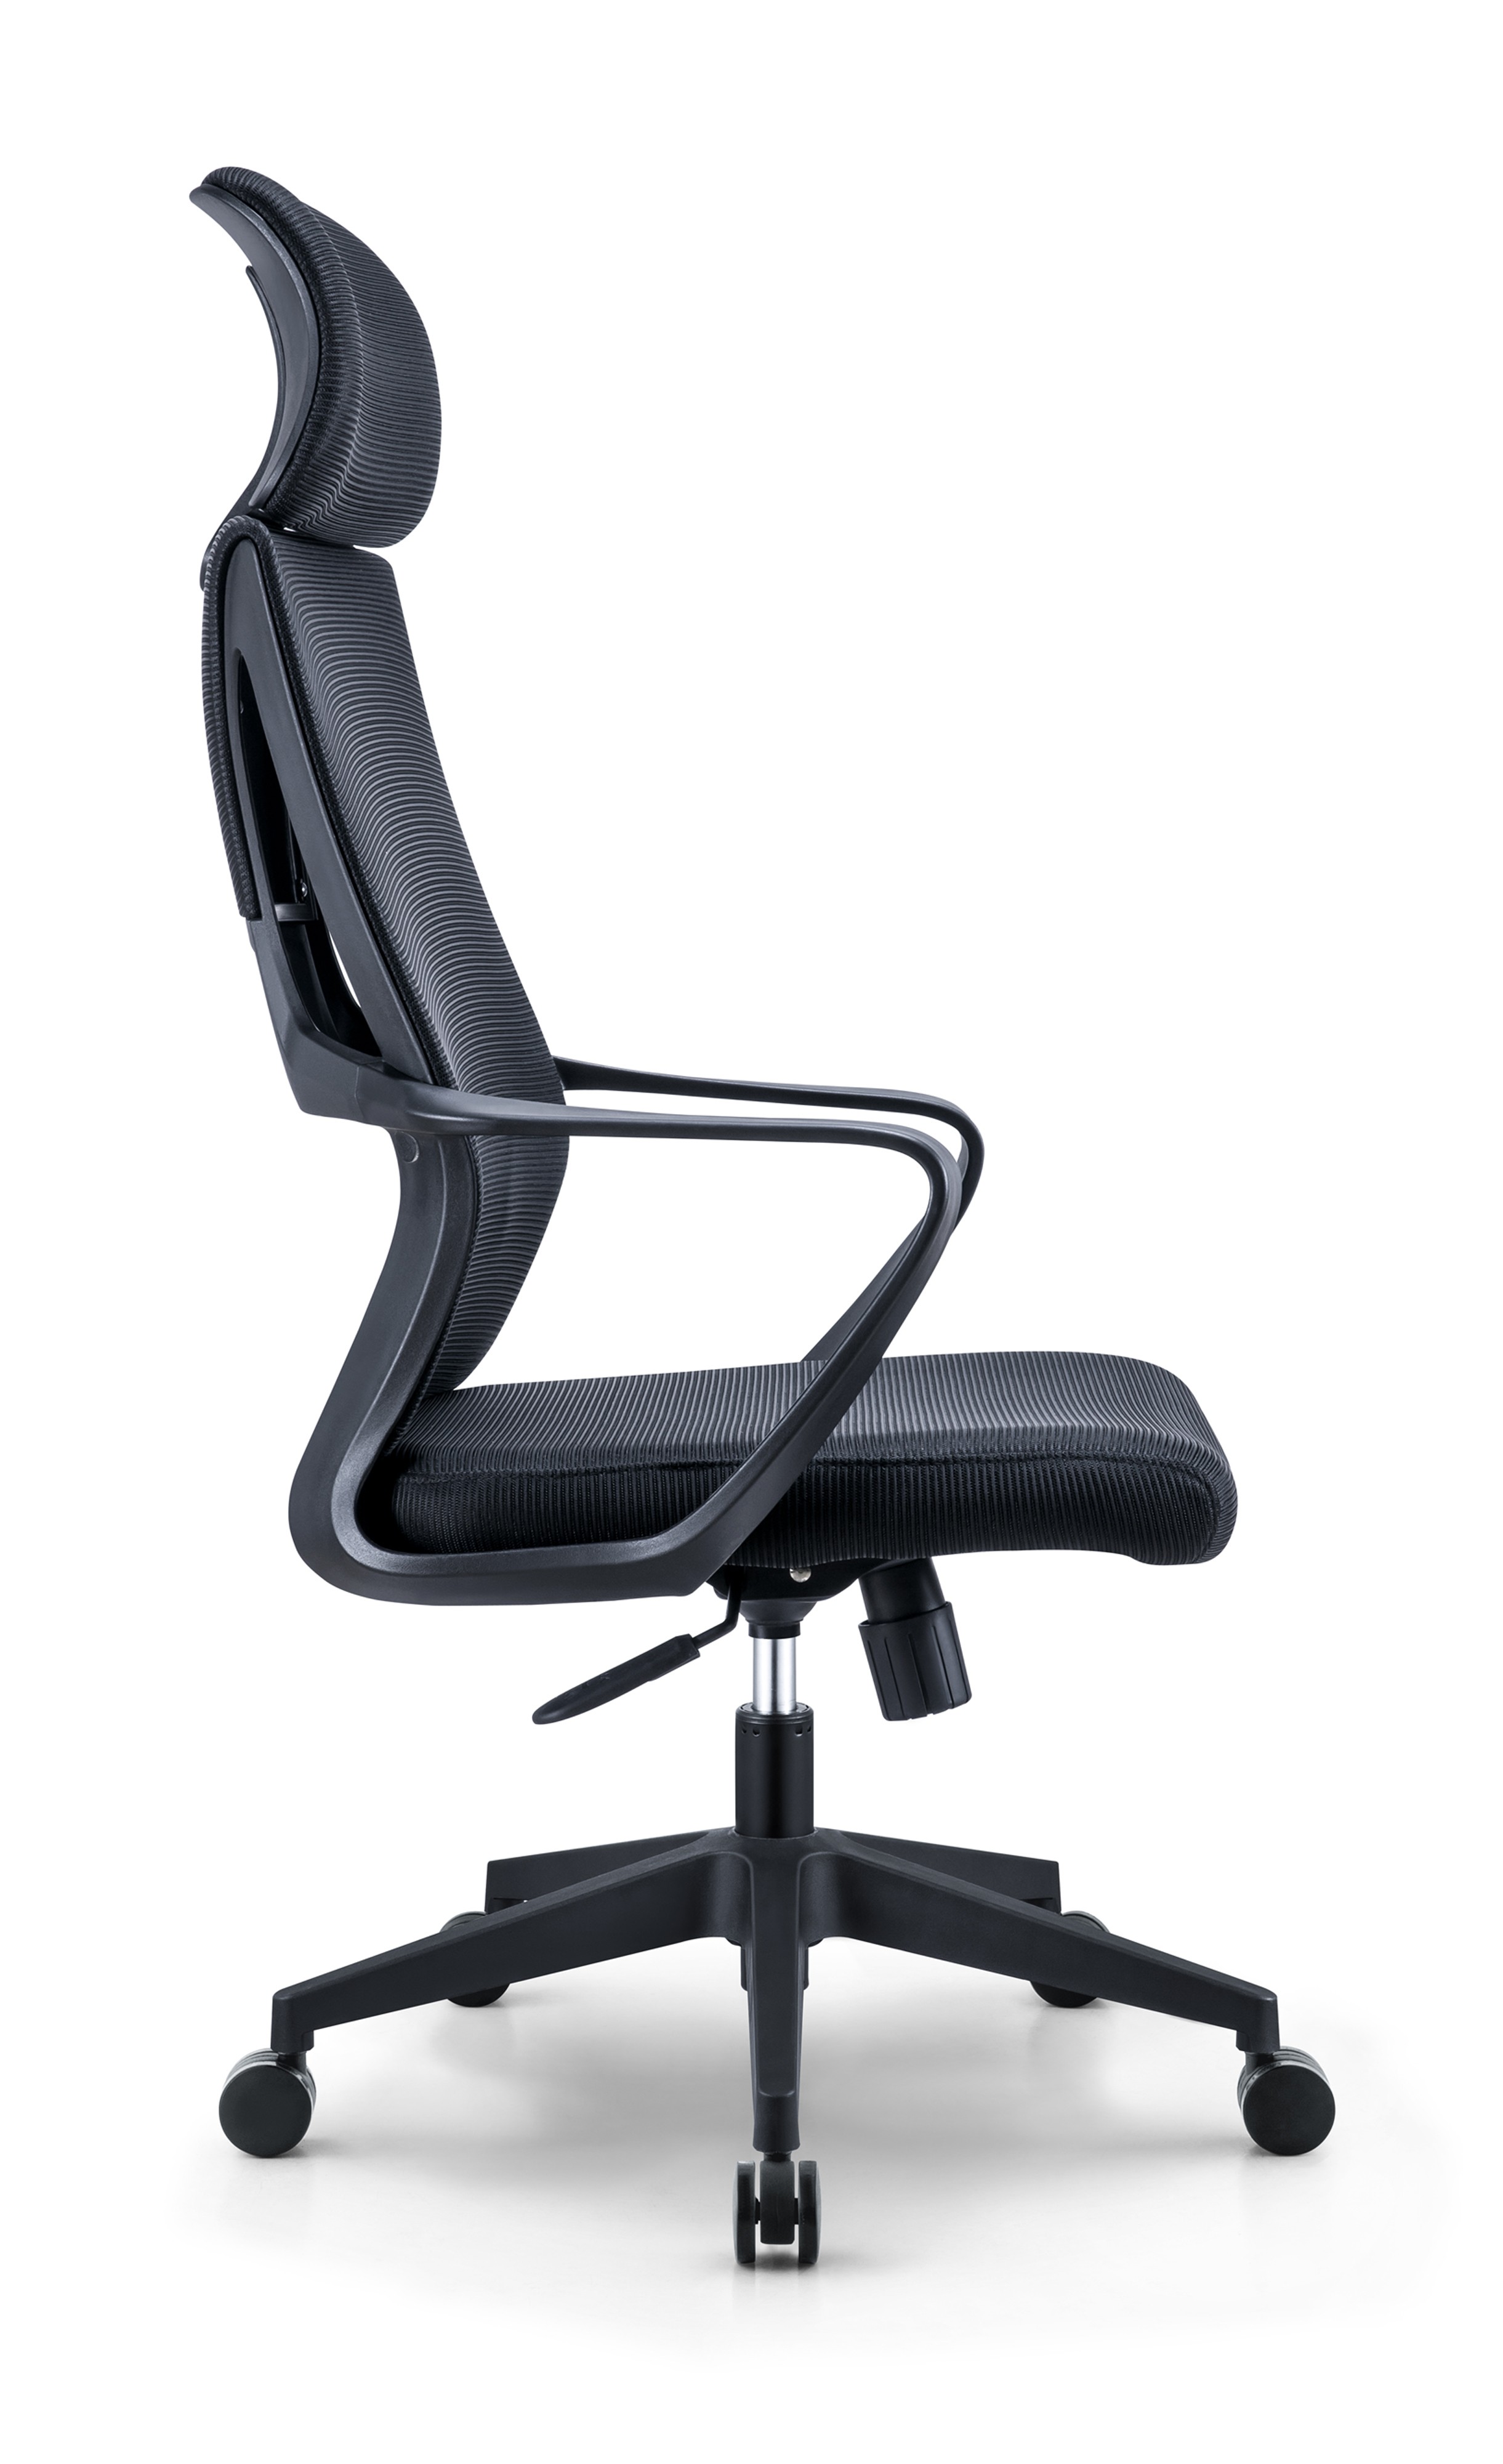 Newcity 544A حار بيع الحديثة عالية الظهر شبكة كرسي أفضل الأسعار شبكة كرسي قابل للتعديل مسند الرأس شبكة كرسي الموظفين قطب كرسي أثاث المكاتب المورد فوشان الصين